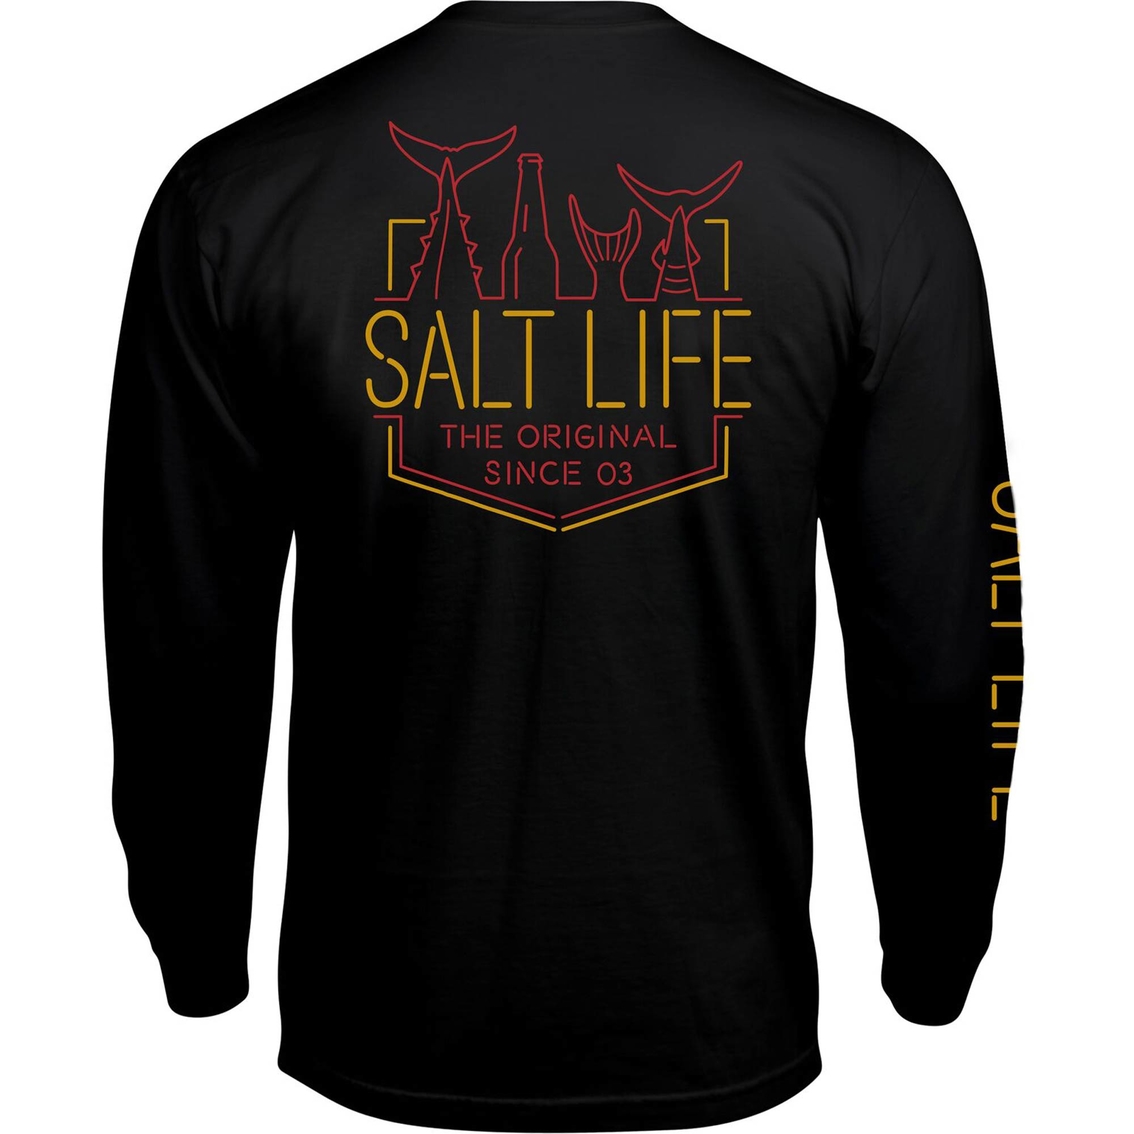 Salt Life Neon Tails Tee - Image 2 of 2